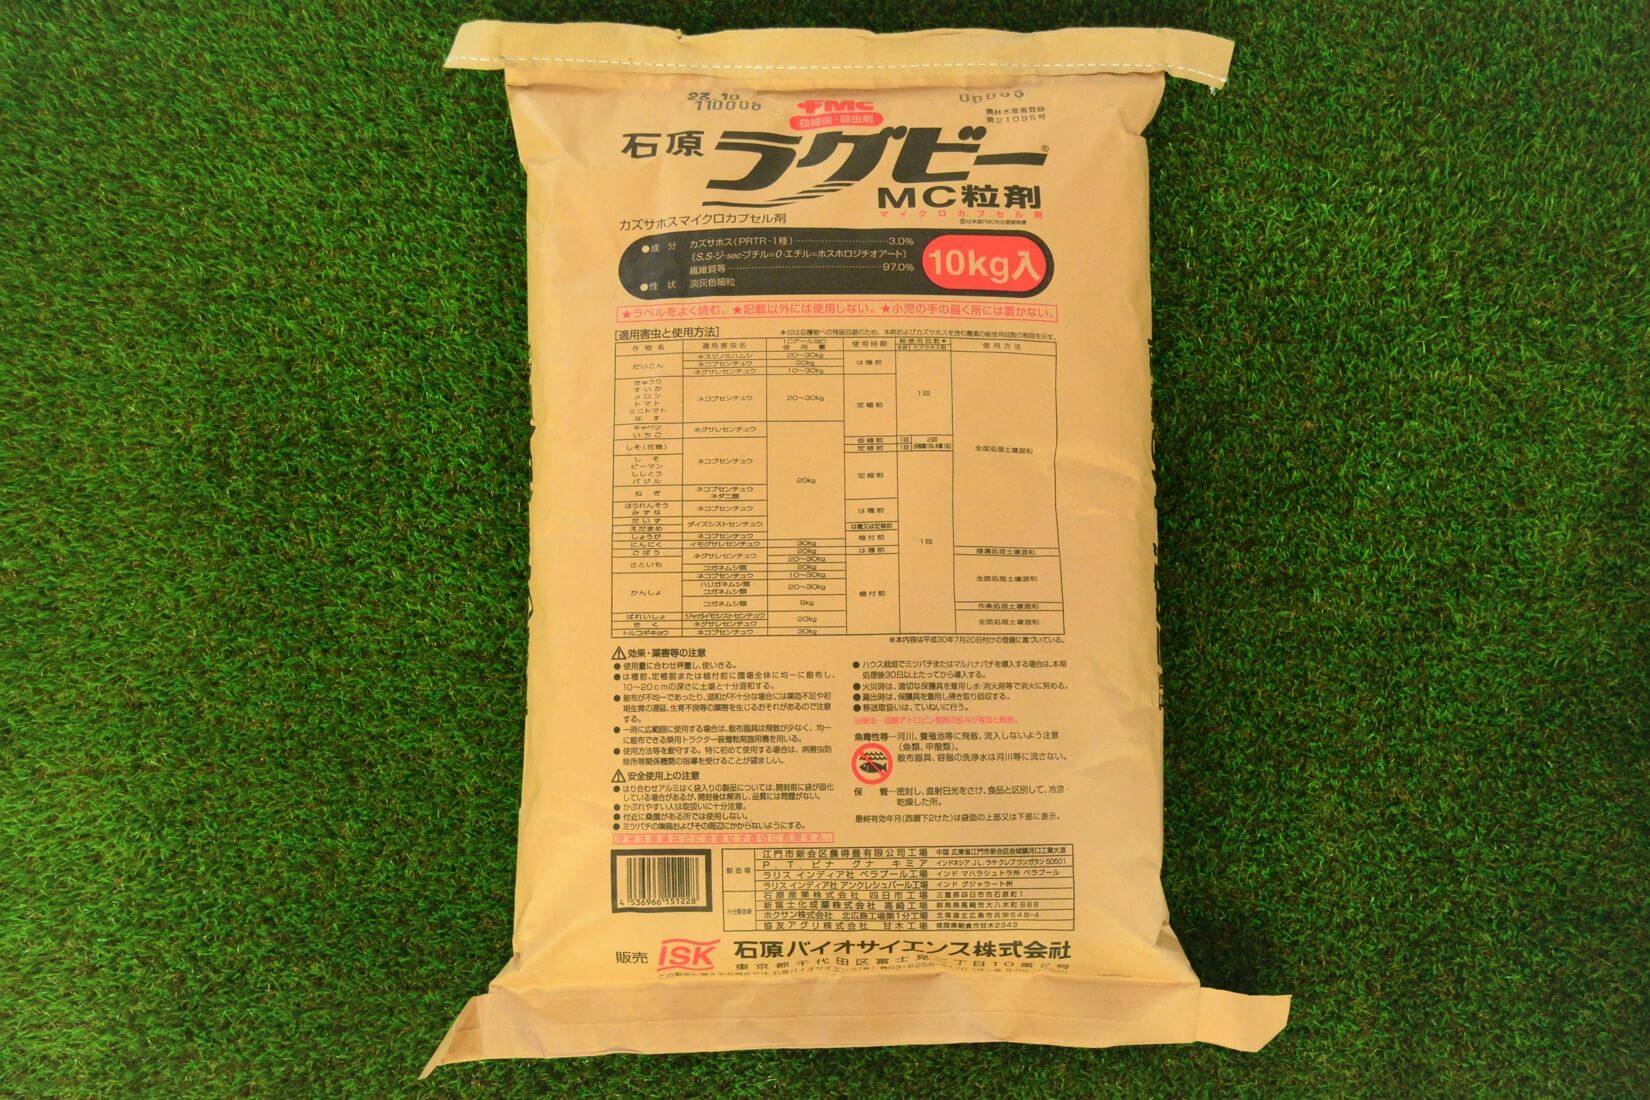 殺虫剤 農薬 ラグビーＭＣ粒剤 10kg - 肥料、薬品